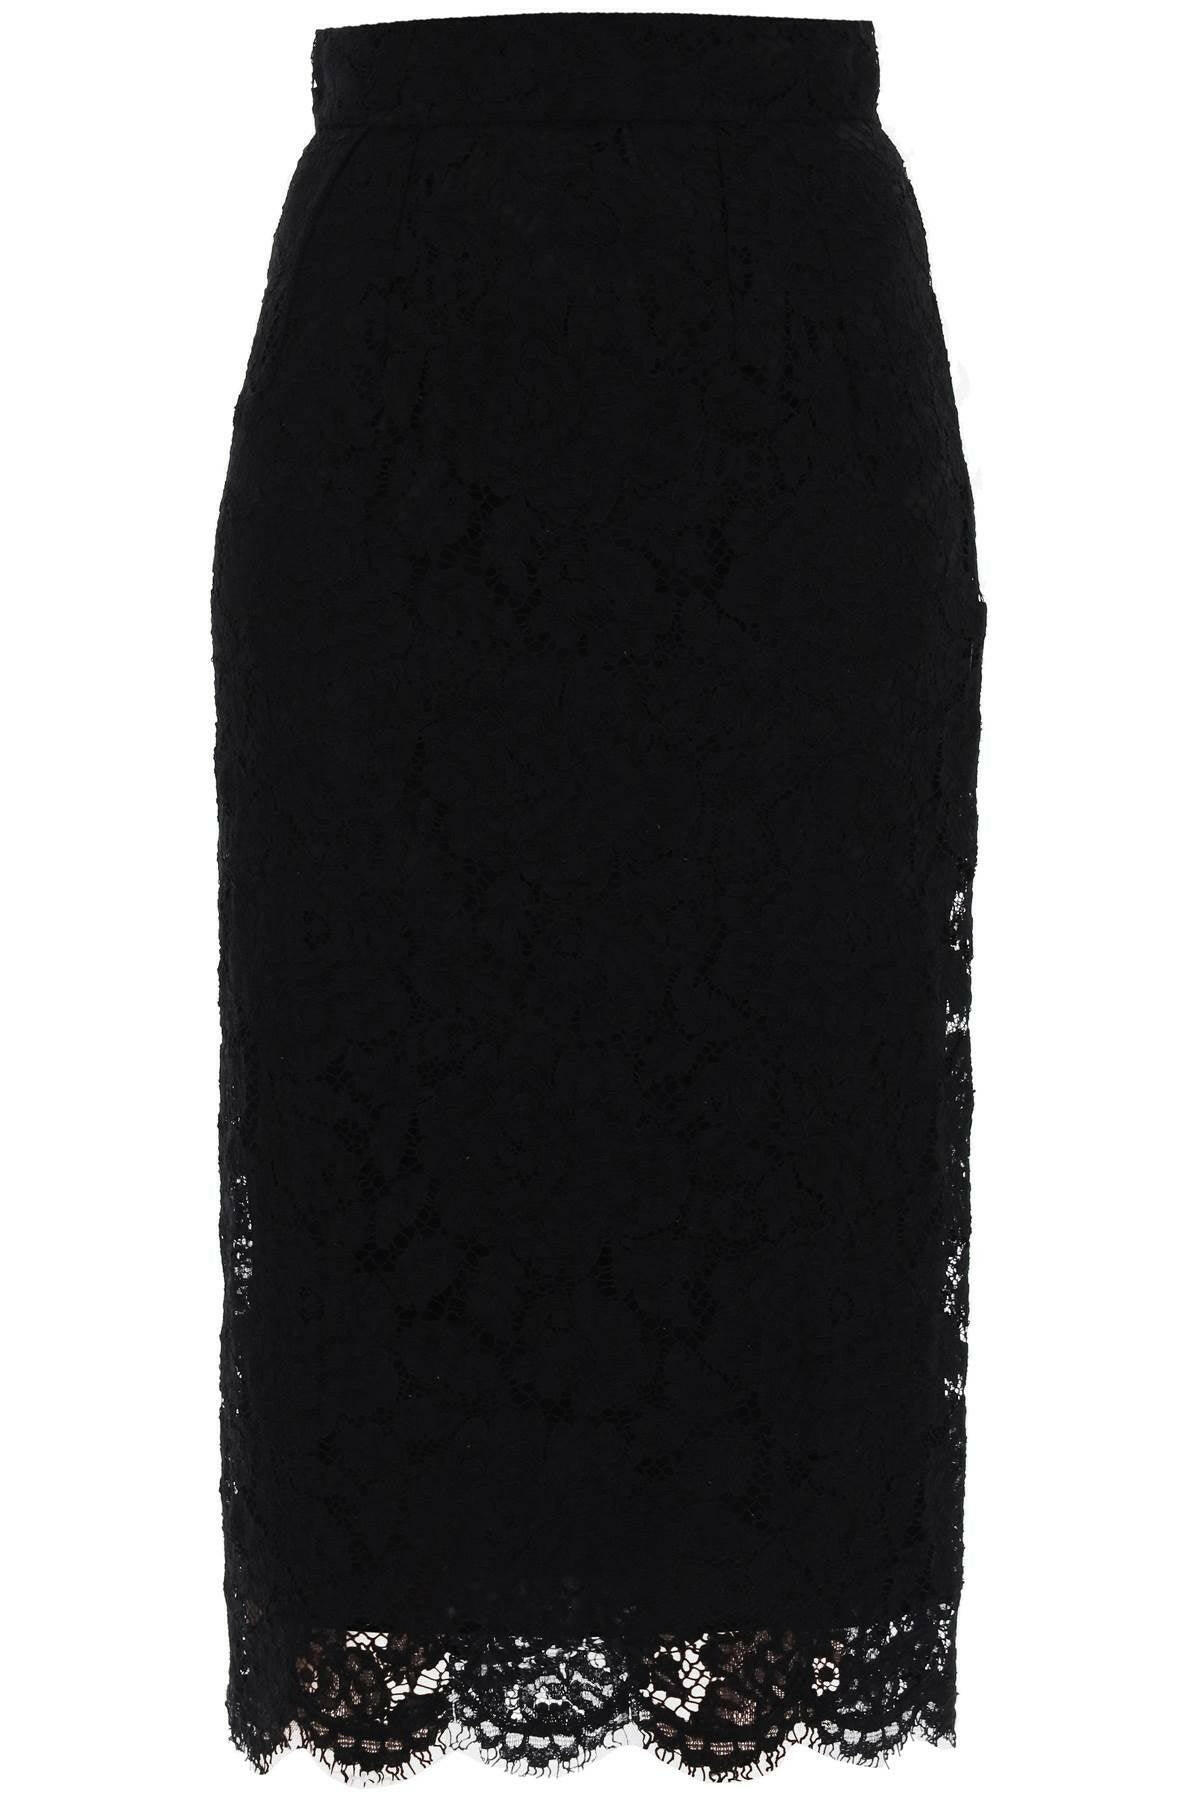 Dolce & Gabbana Lace Pencil Skirt With Tube Silhouette - JOHN JULIA